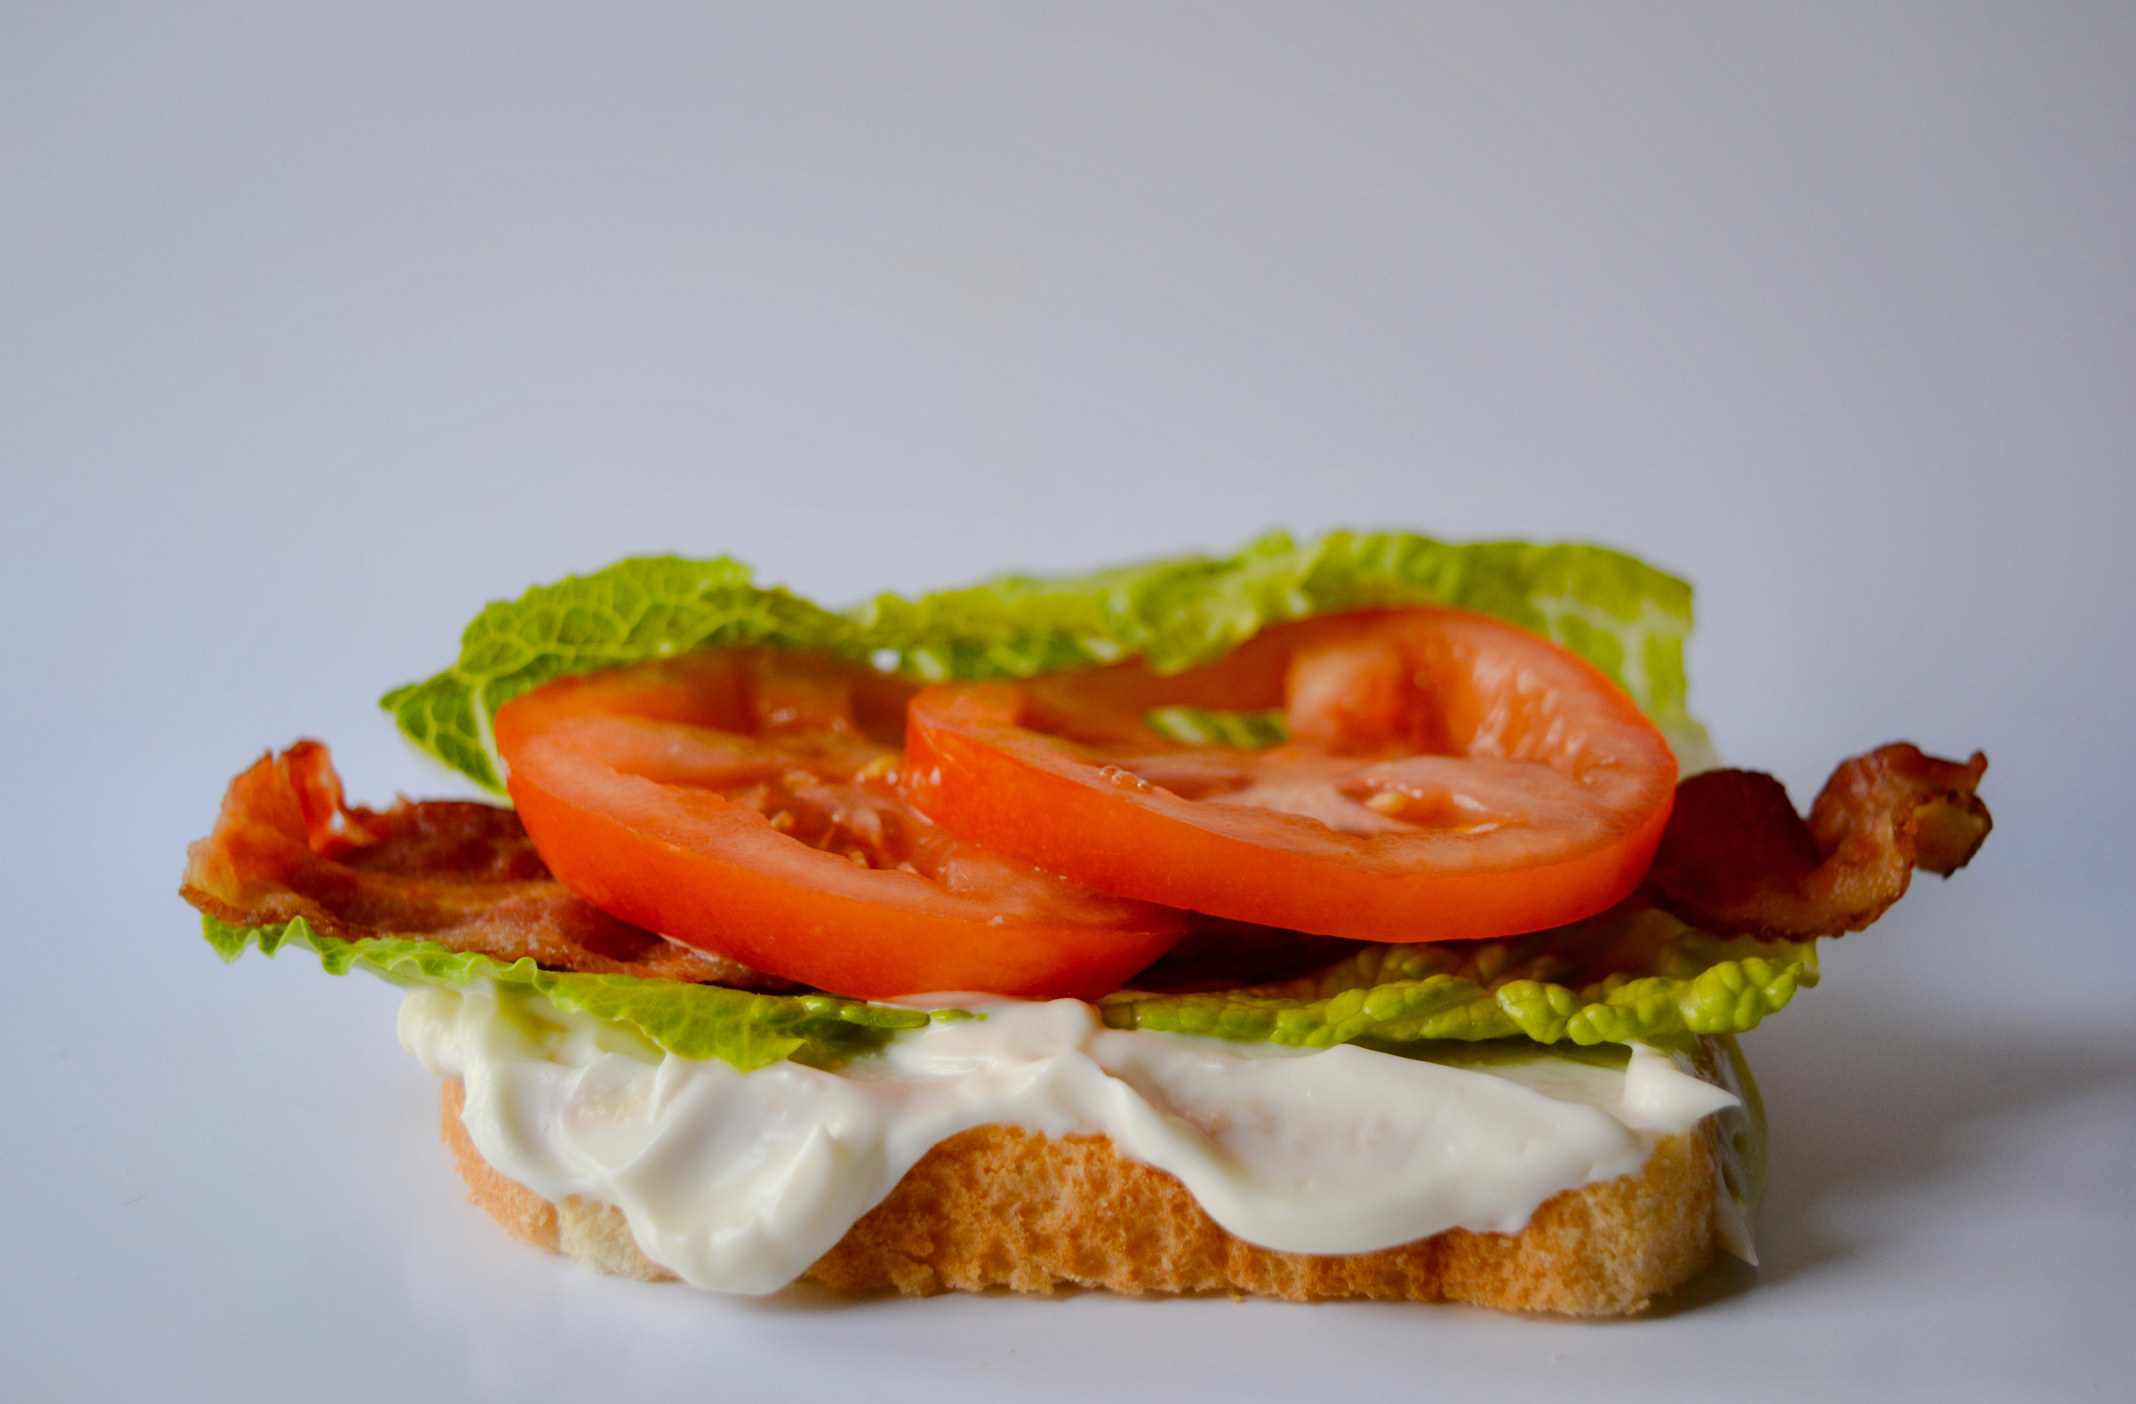 An open-face BLT sandwich with mayonnaise.